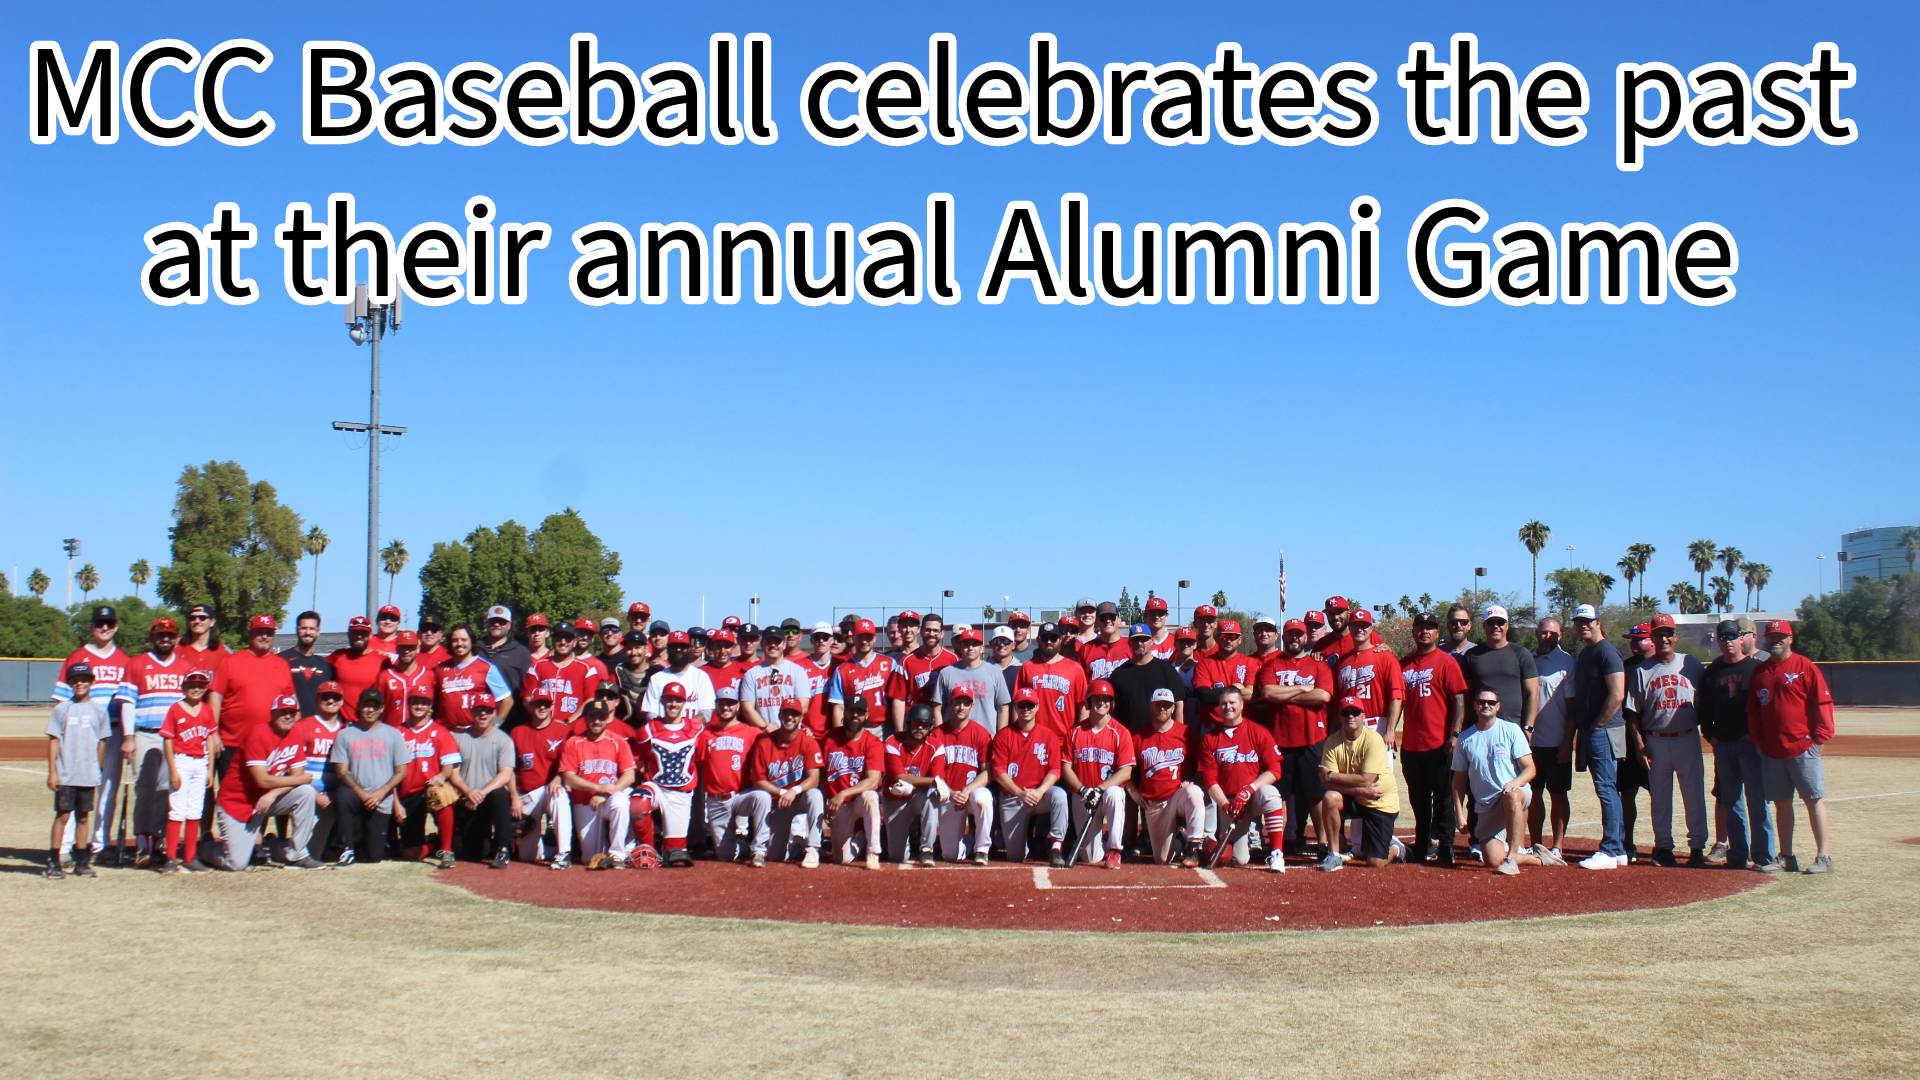 MCC Baseball community comes together at annual Alumni Game